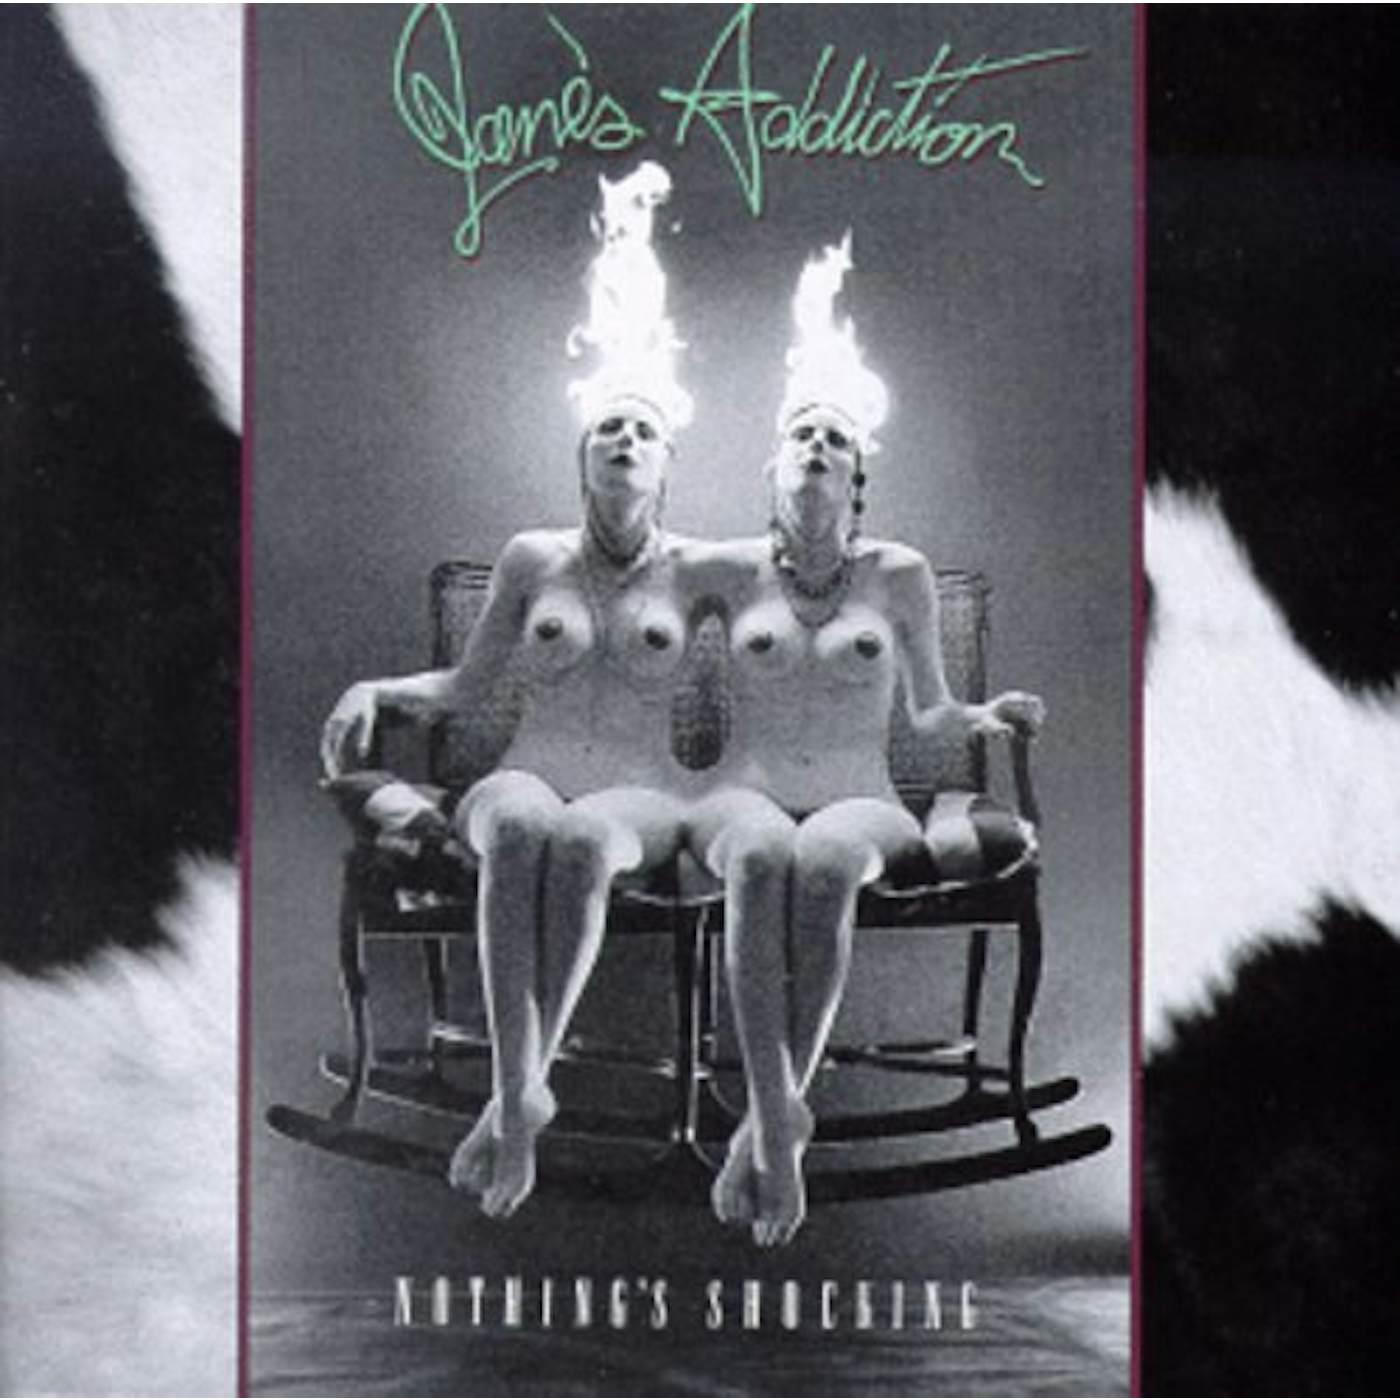 Jane's Addiction Nothing's Shocking Vinyl Record